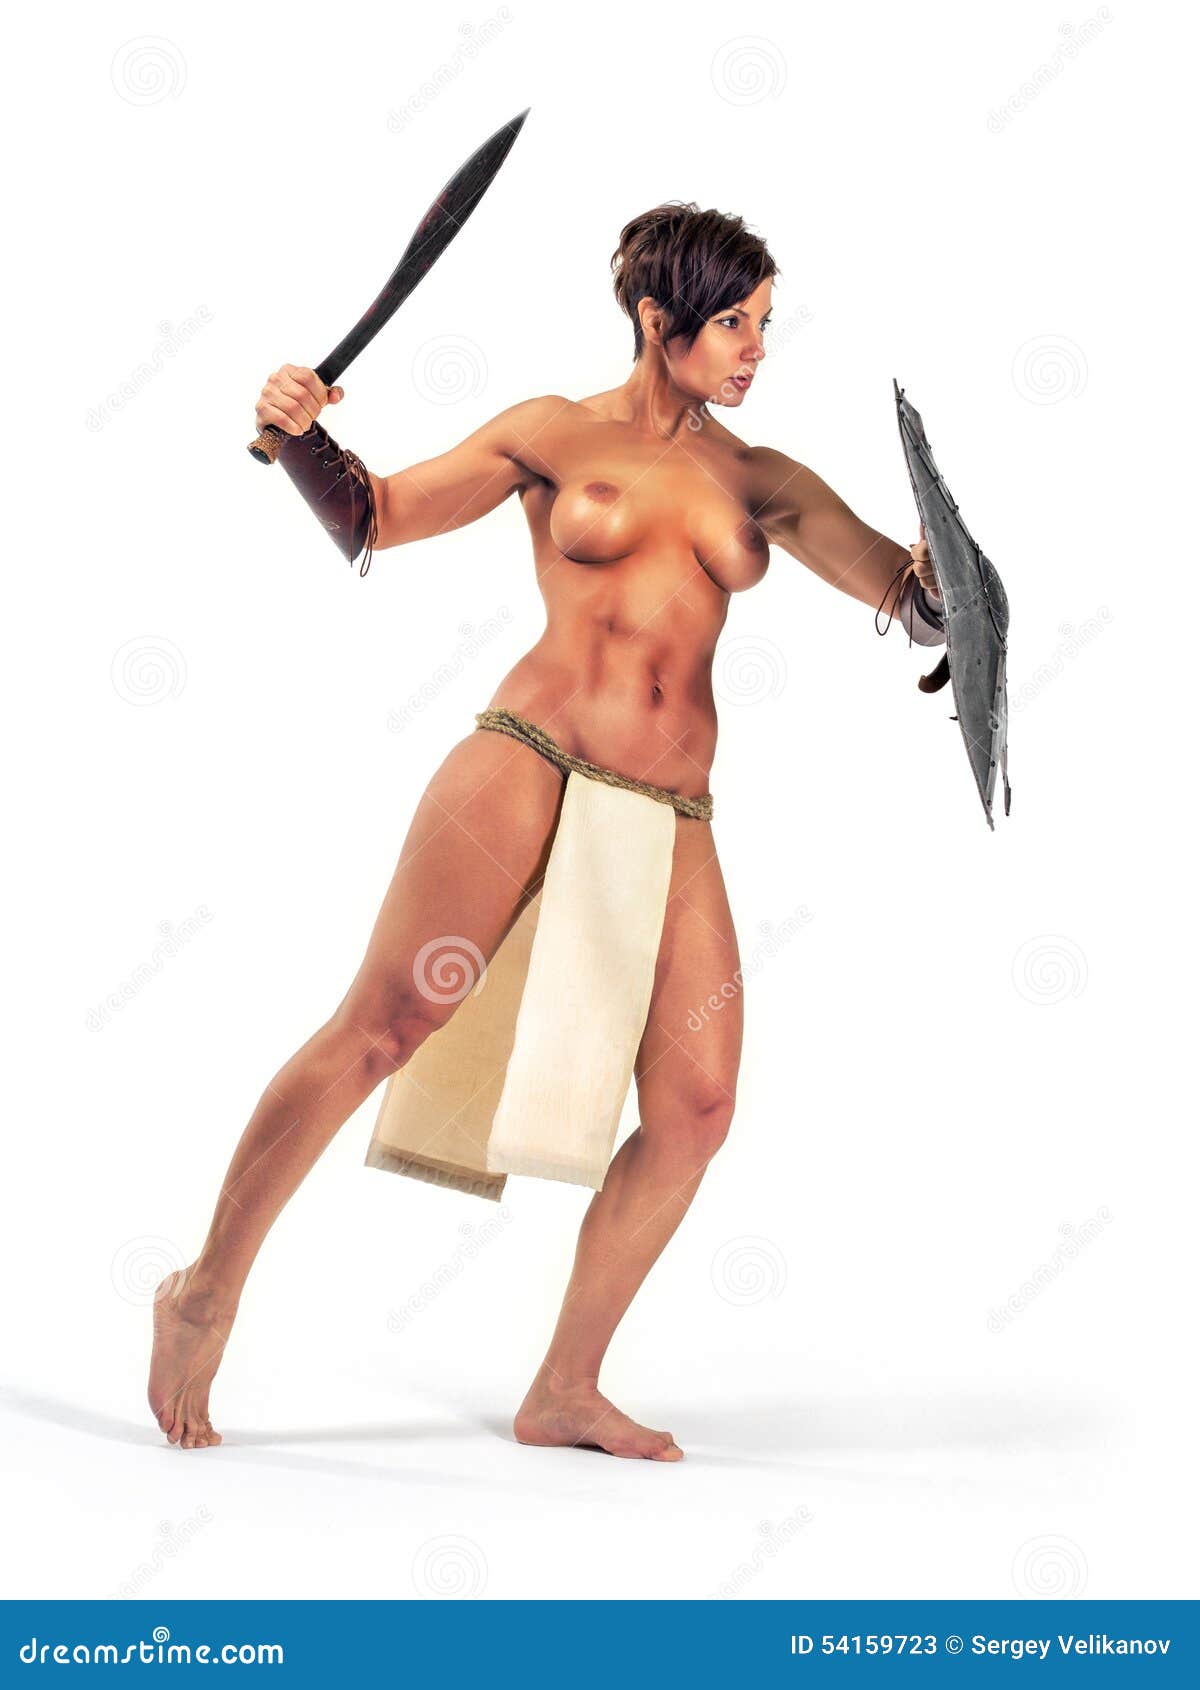 anup cherian add nude warrior women photo